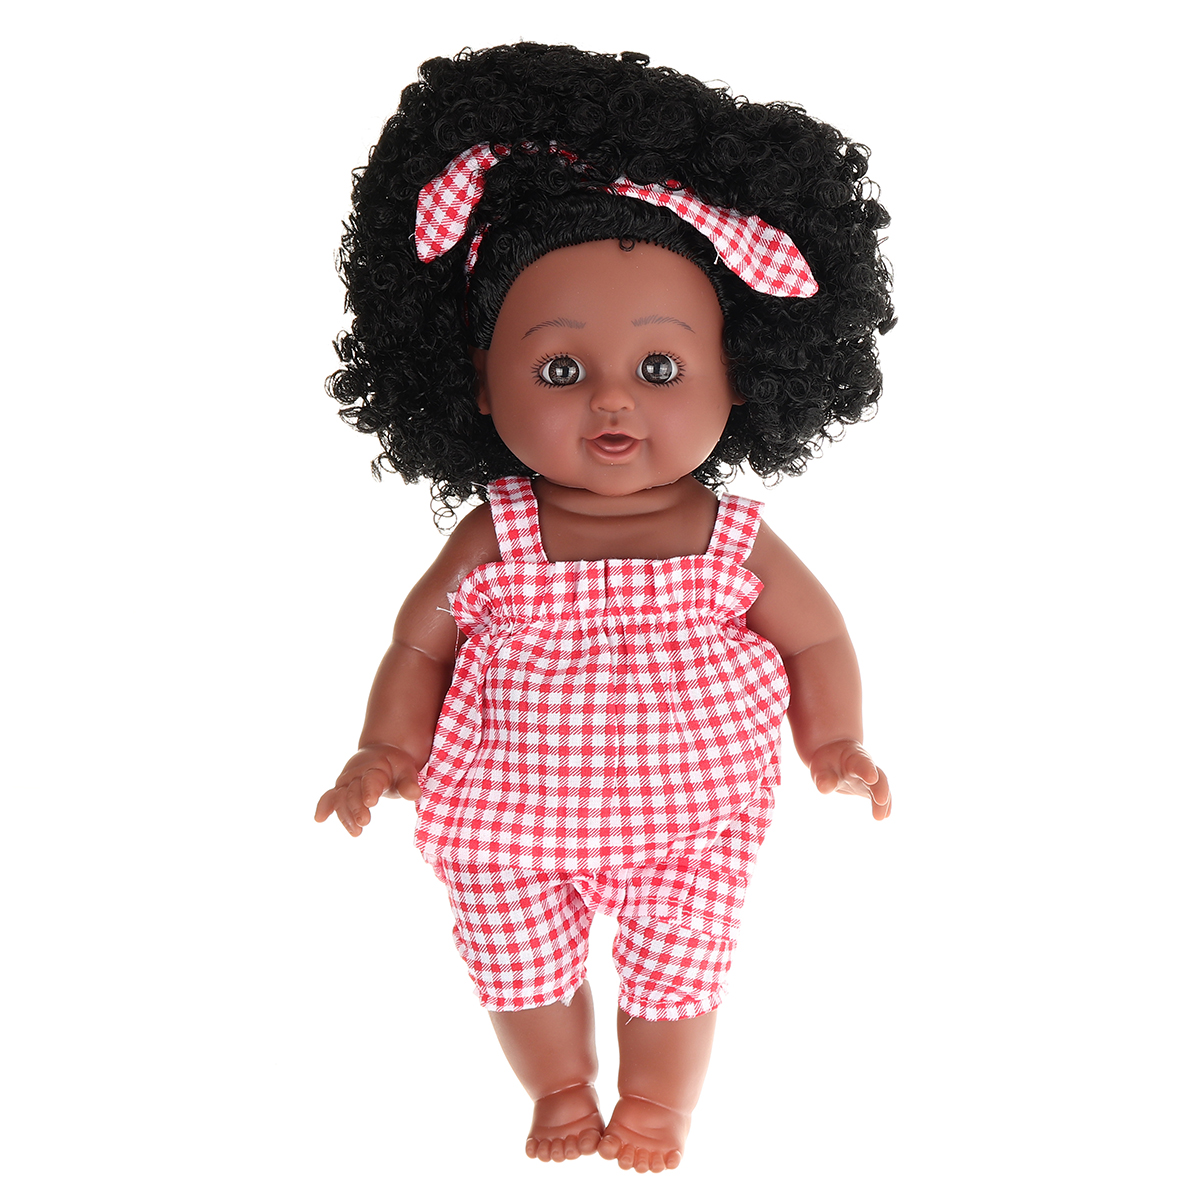 12Inch-Soft-Silicone-Vinyl-PVC-Black-Baby-Fashion-Doll-Rotate-360deg-African-Girl-Perfect-Reborn-Dol-1734365-1